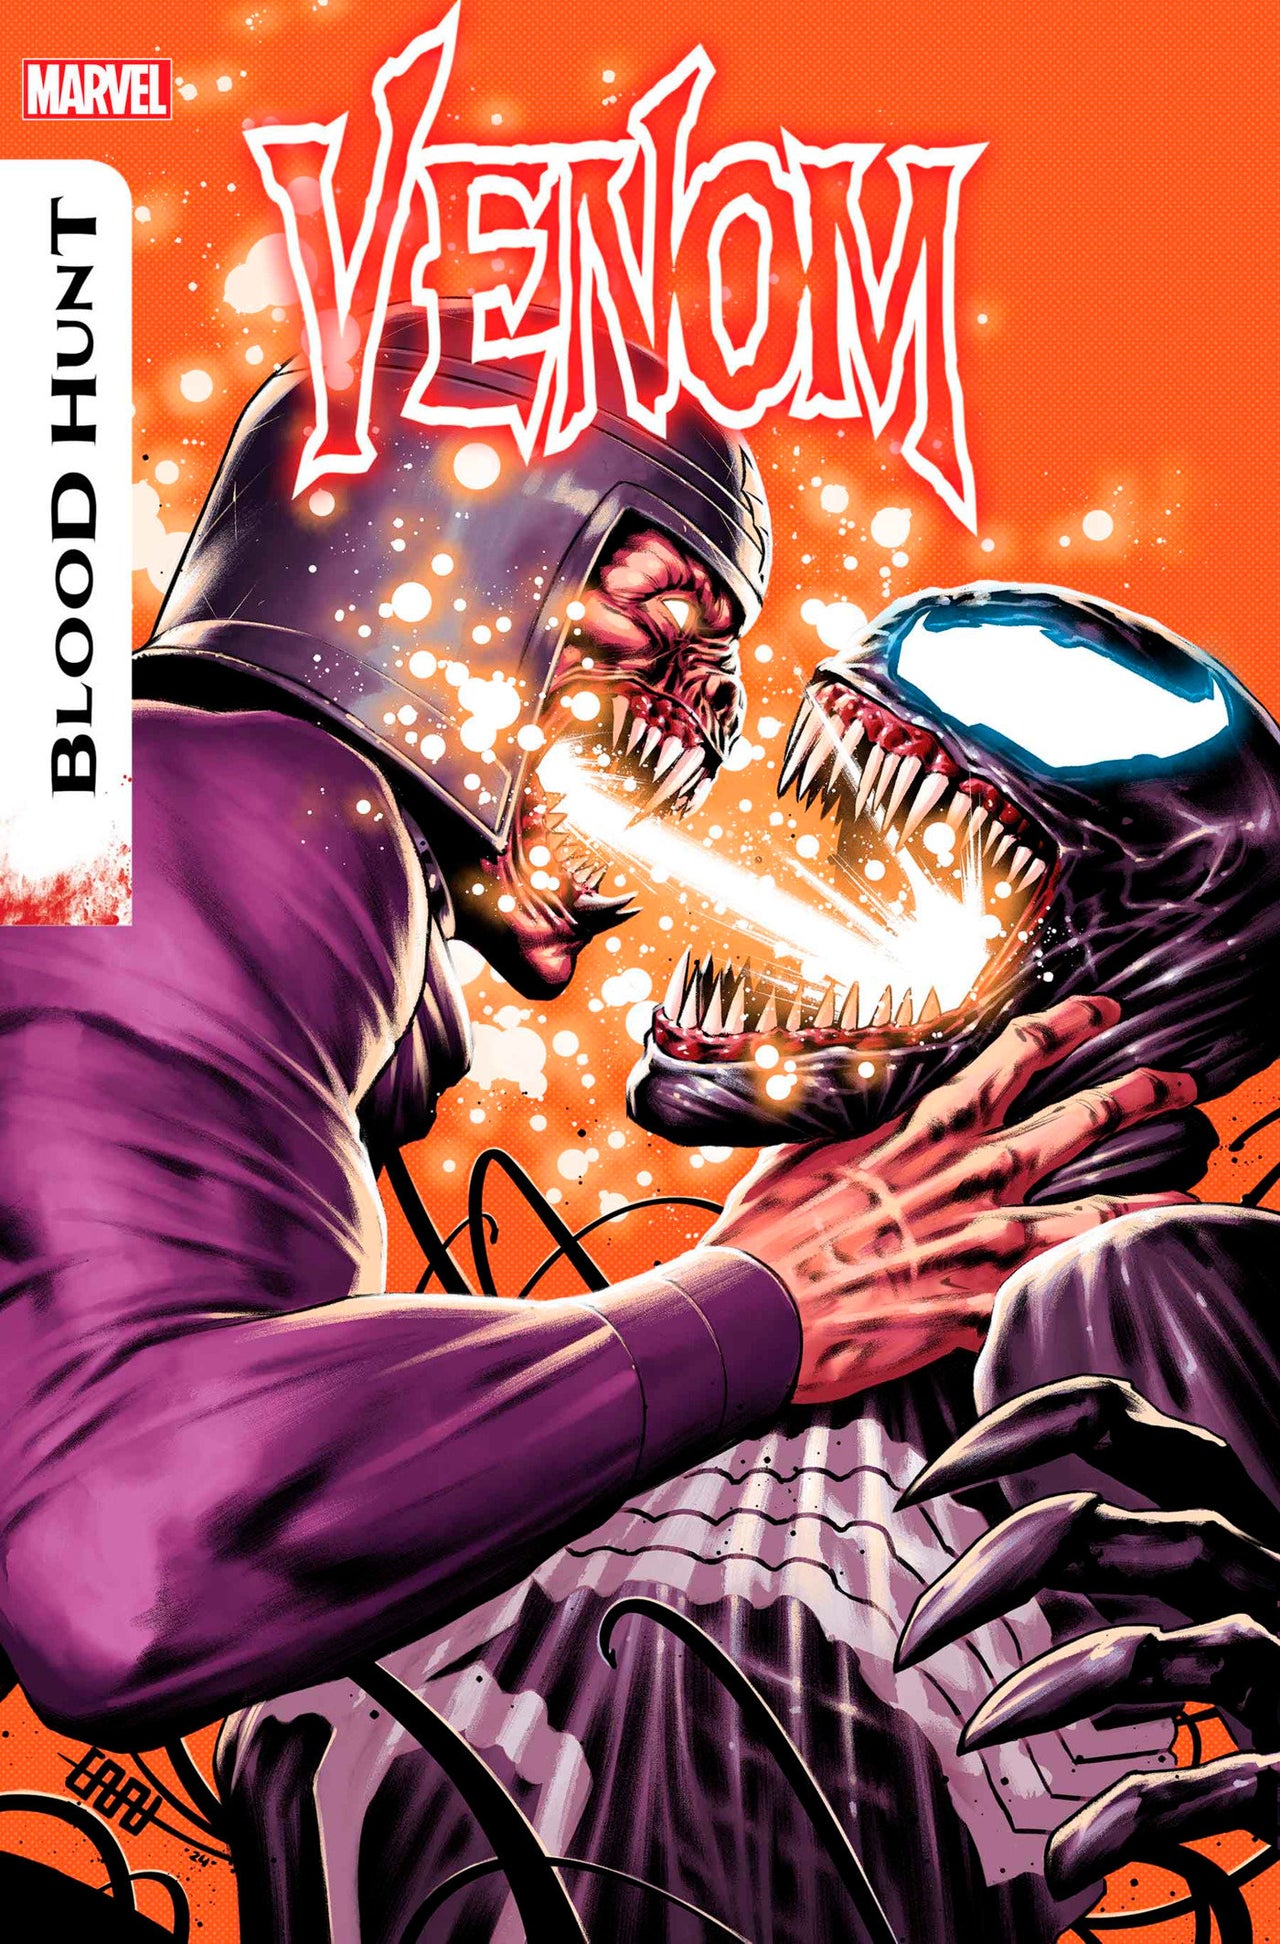 Venom (2021) #34